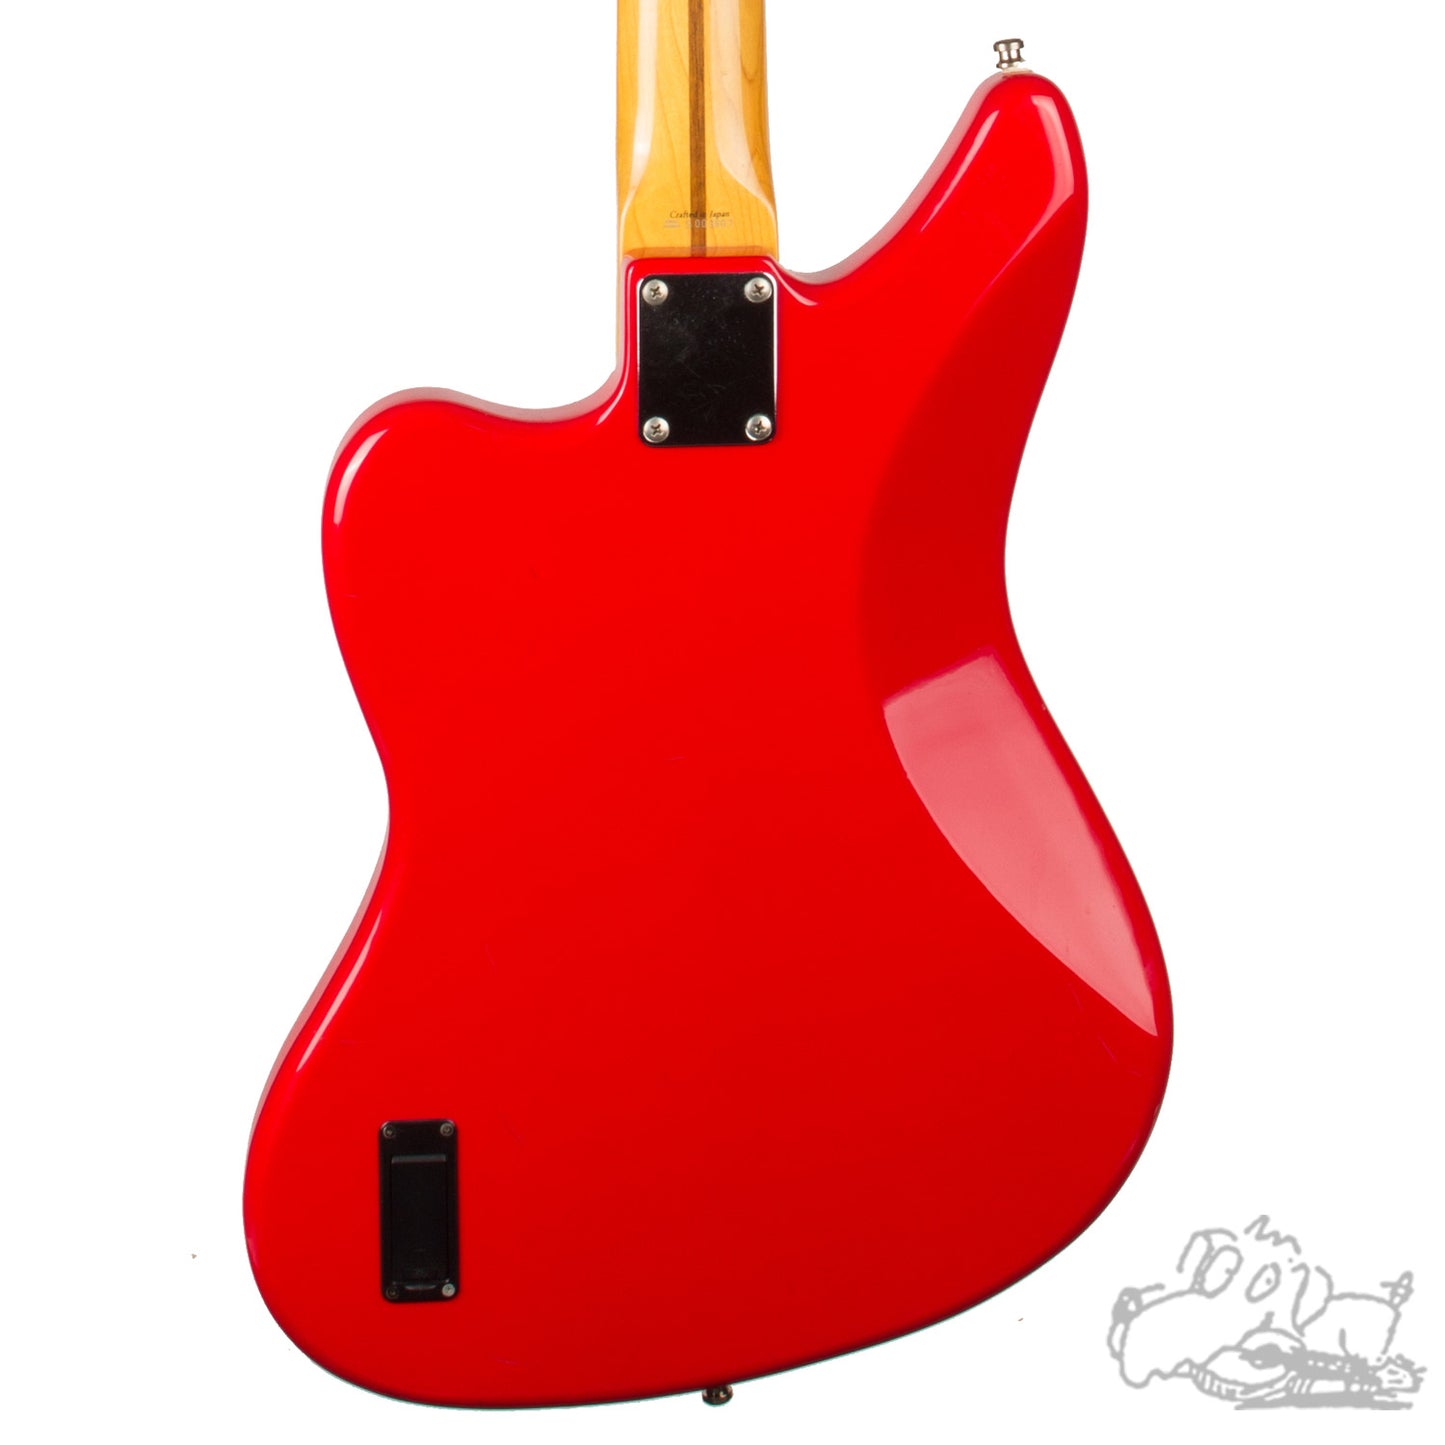 2007 Fender Jaguar Bass - Hot Rod Red